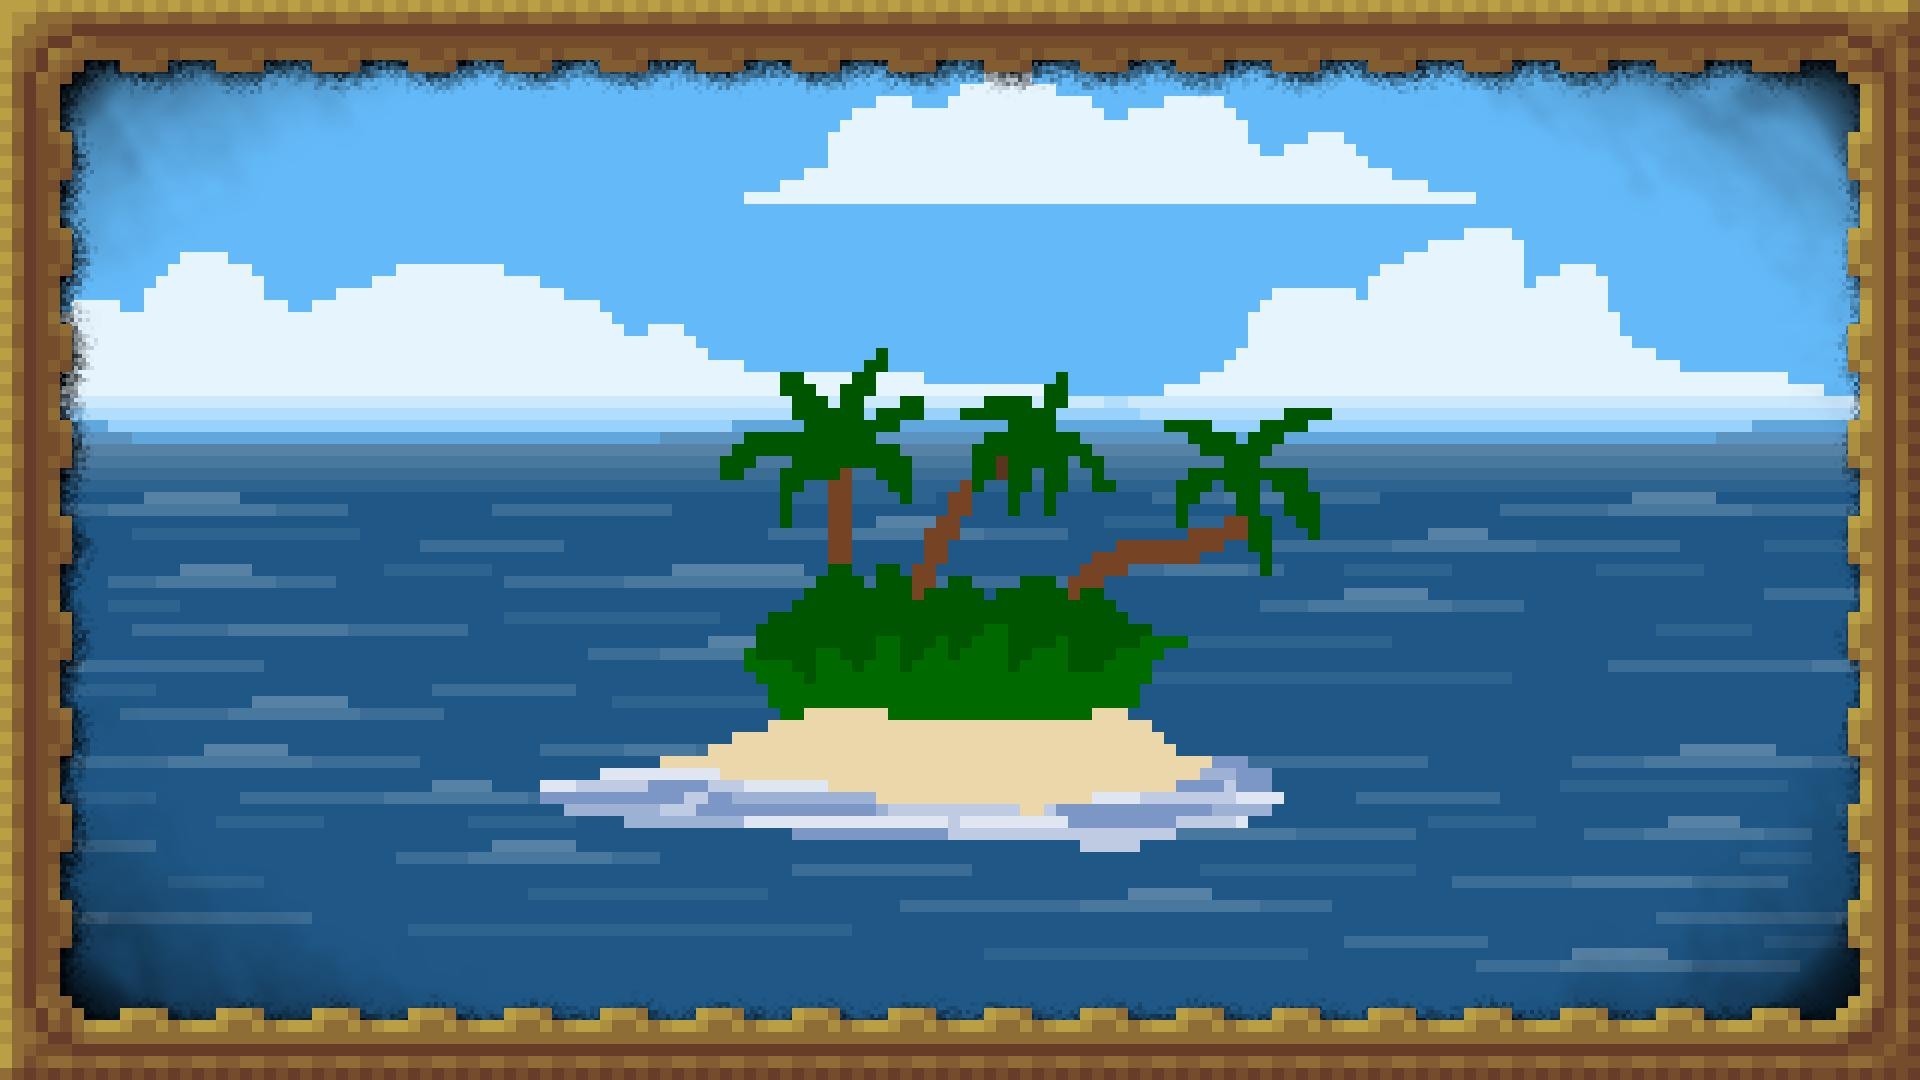 Digital Art Nature Pixel Art Island Sea Palm Trees Clouds Picture Frames Simplicity 1920x1080